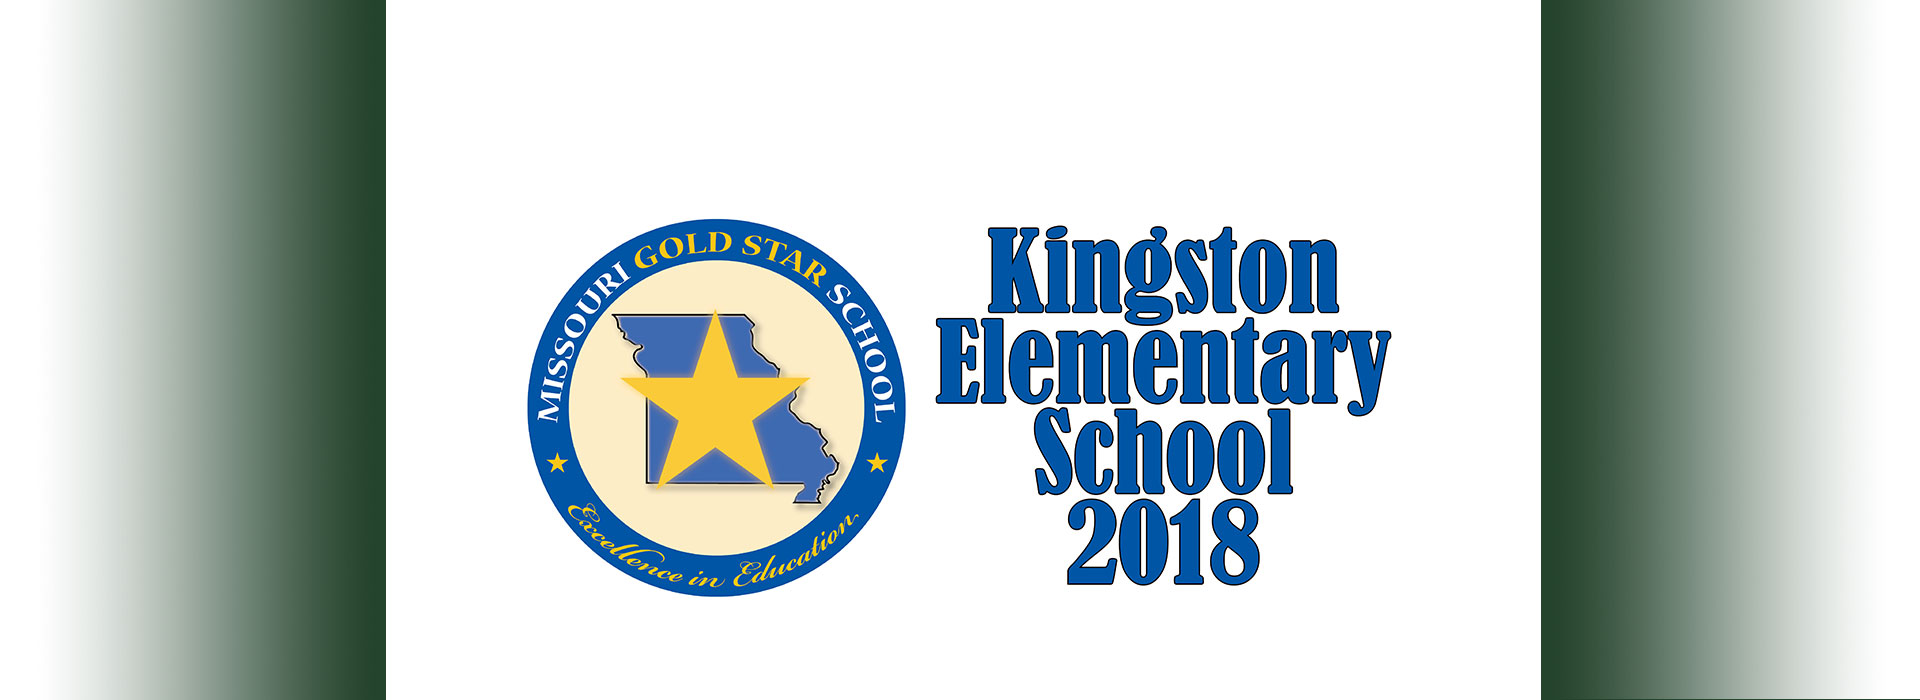 Gold Star Award - kingston k-14